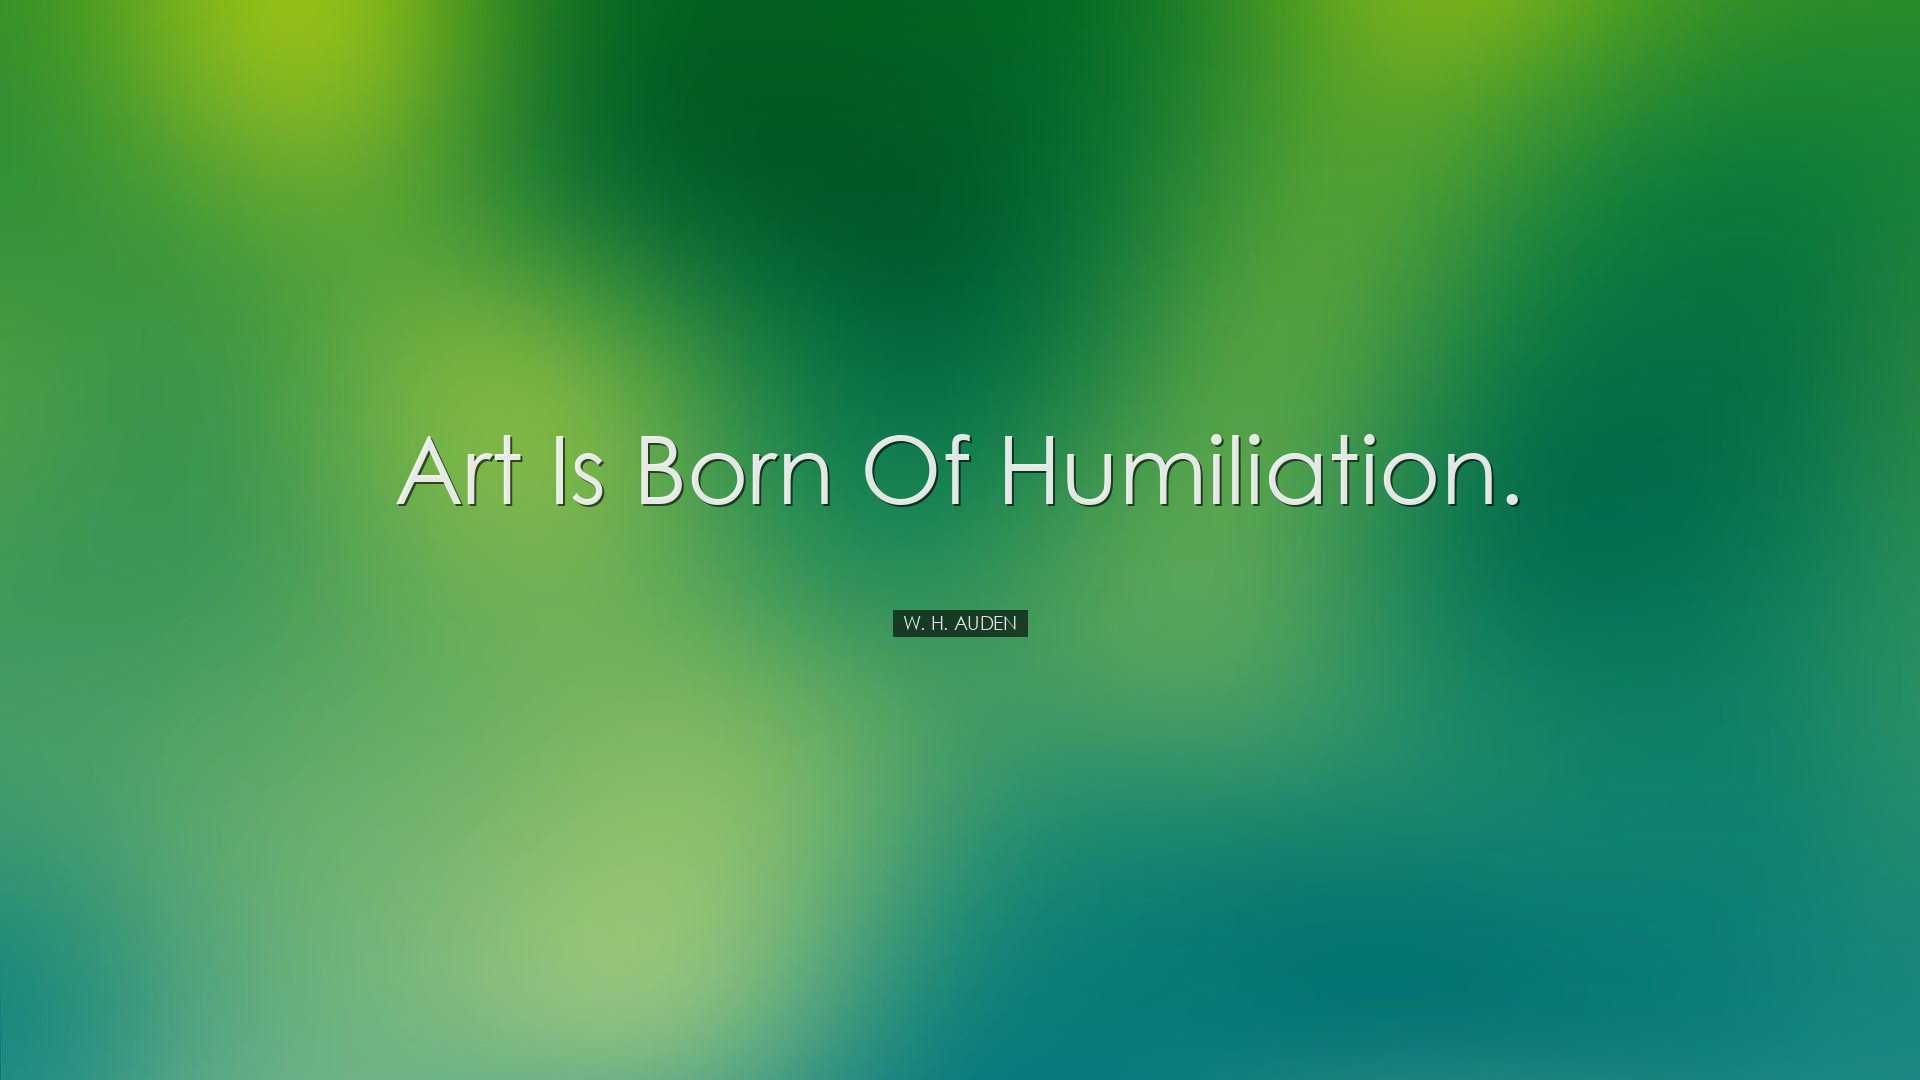 Art is born of humiliation. - W. H. Auden